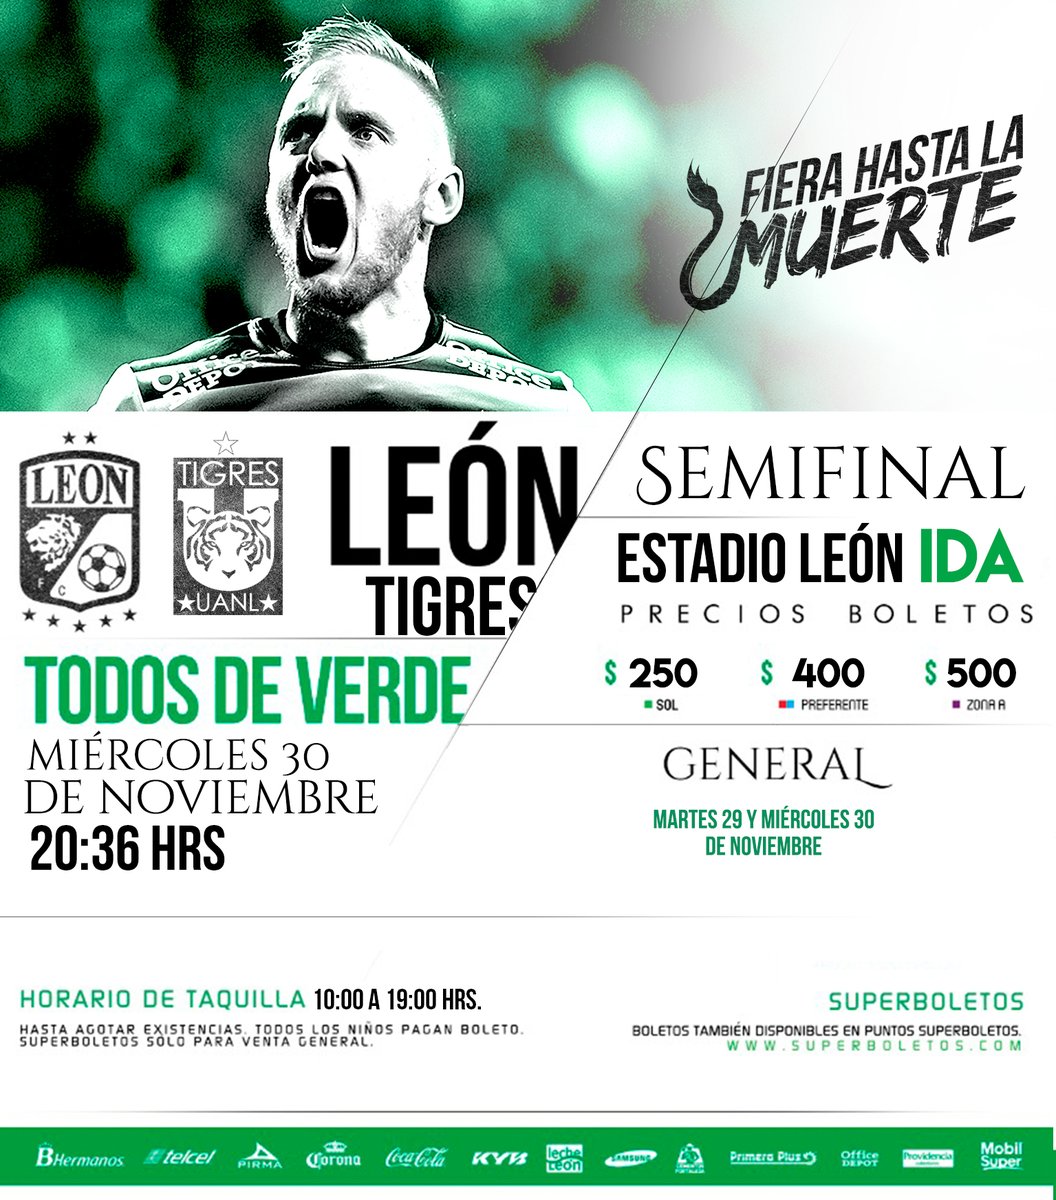 Precio de boletos Leon vs Tigres semifinal apertura 2016